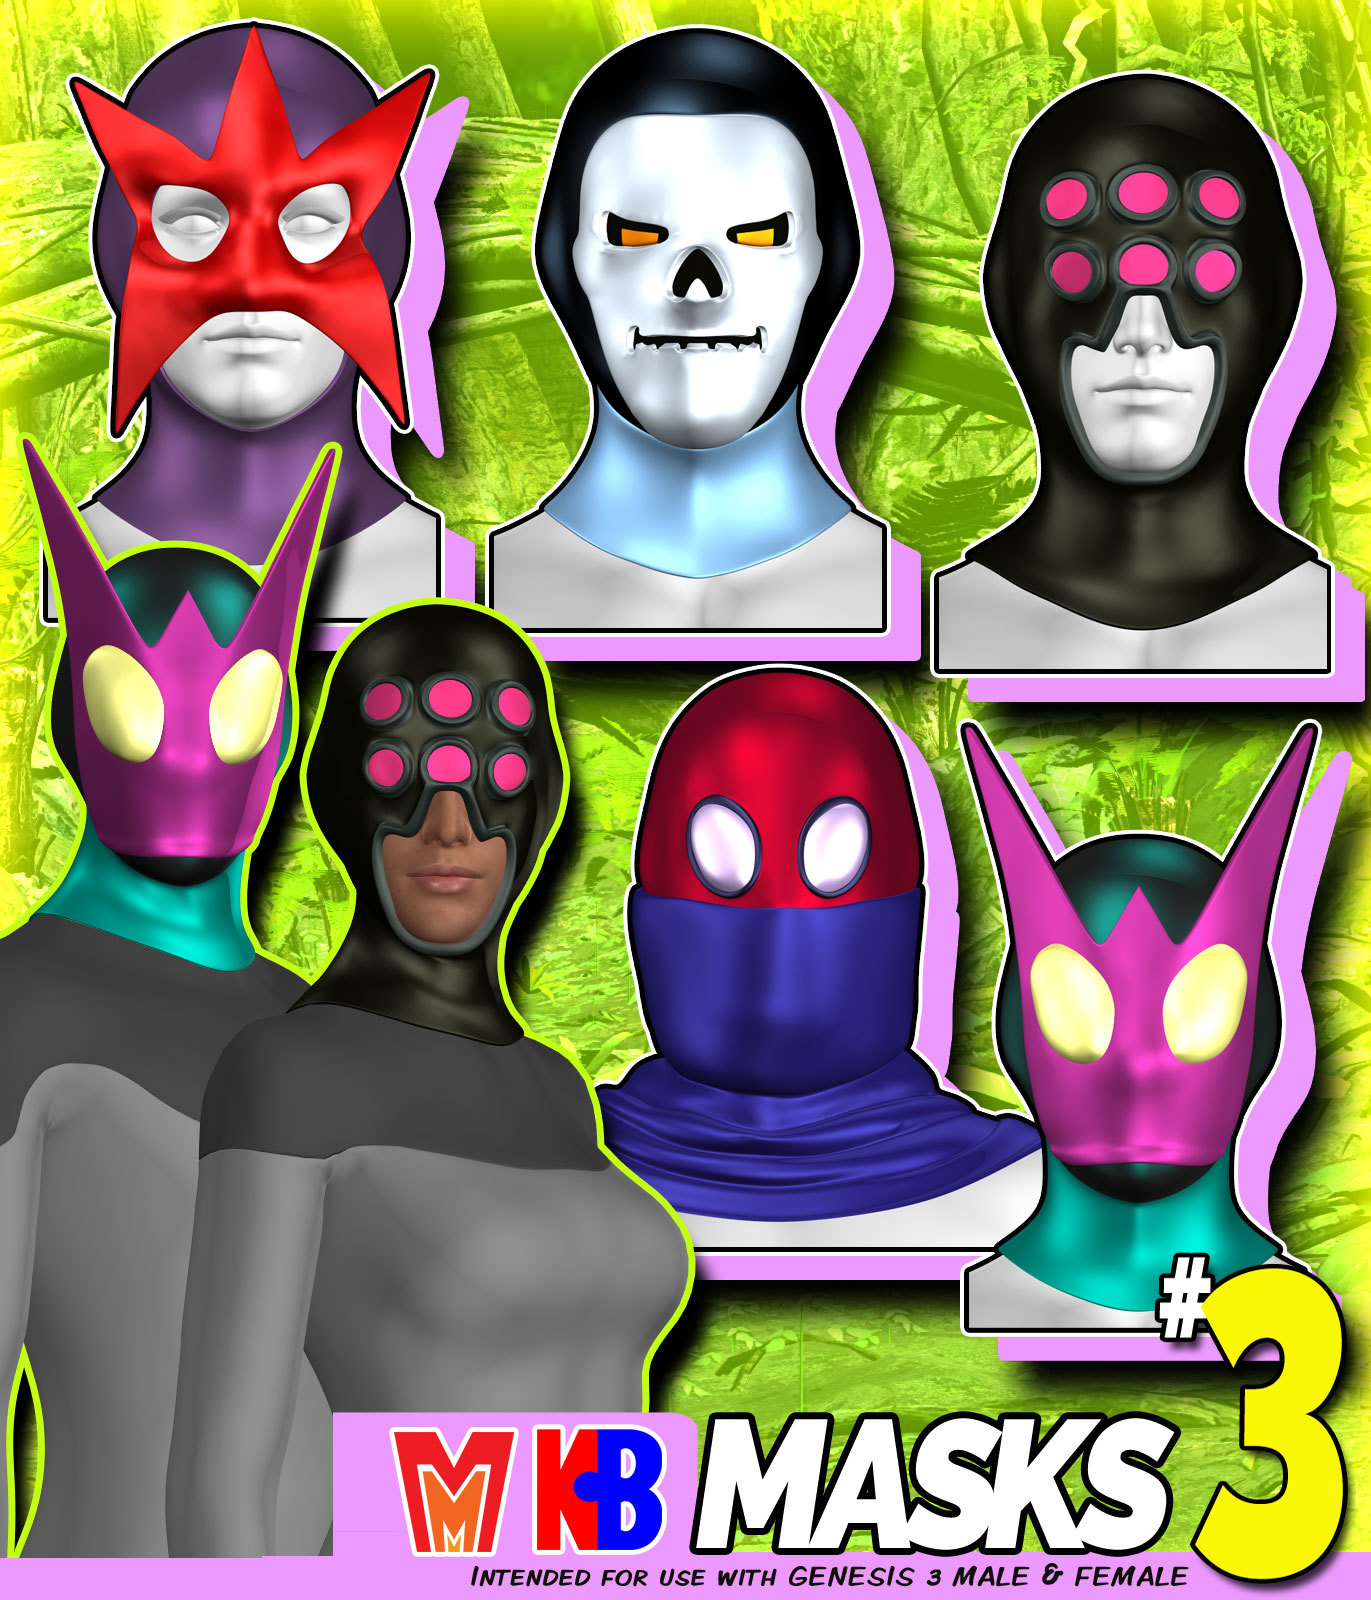 Masks v003 MMKBG3 by: MightyMite, 3D Models by Daz 3D